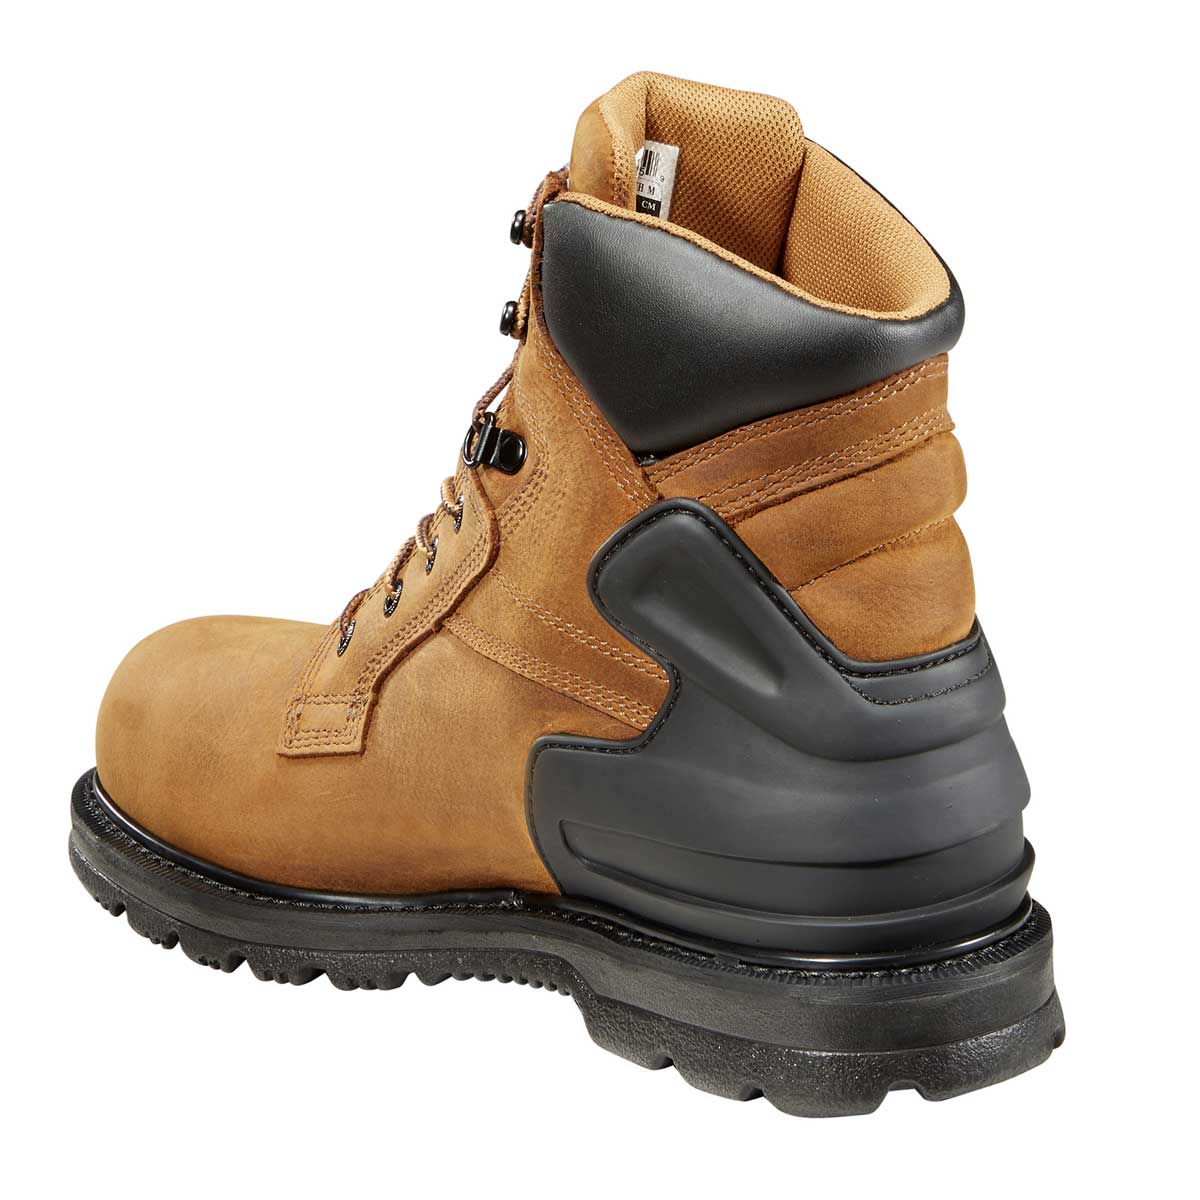 Carhartt Men's 6" Waterproof Steel Toe Work Boots